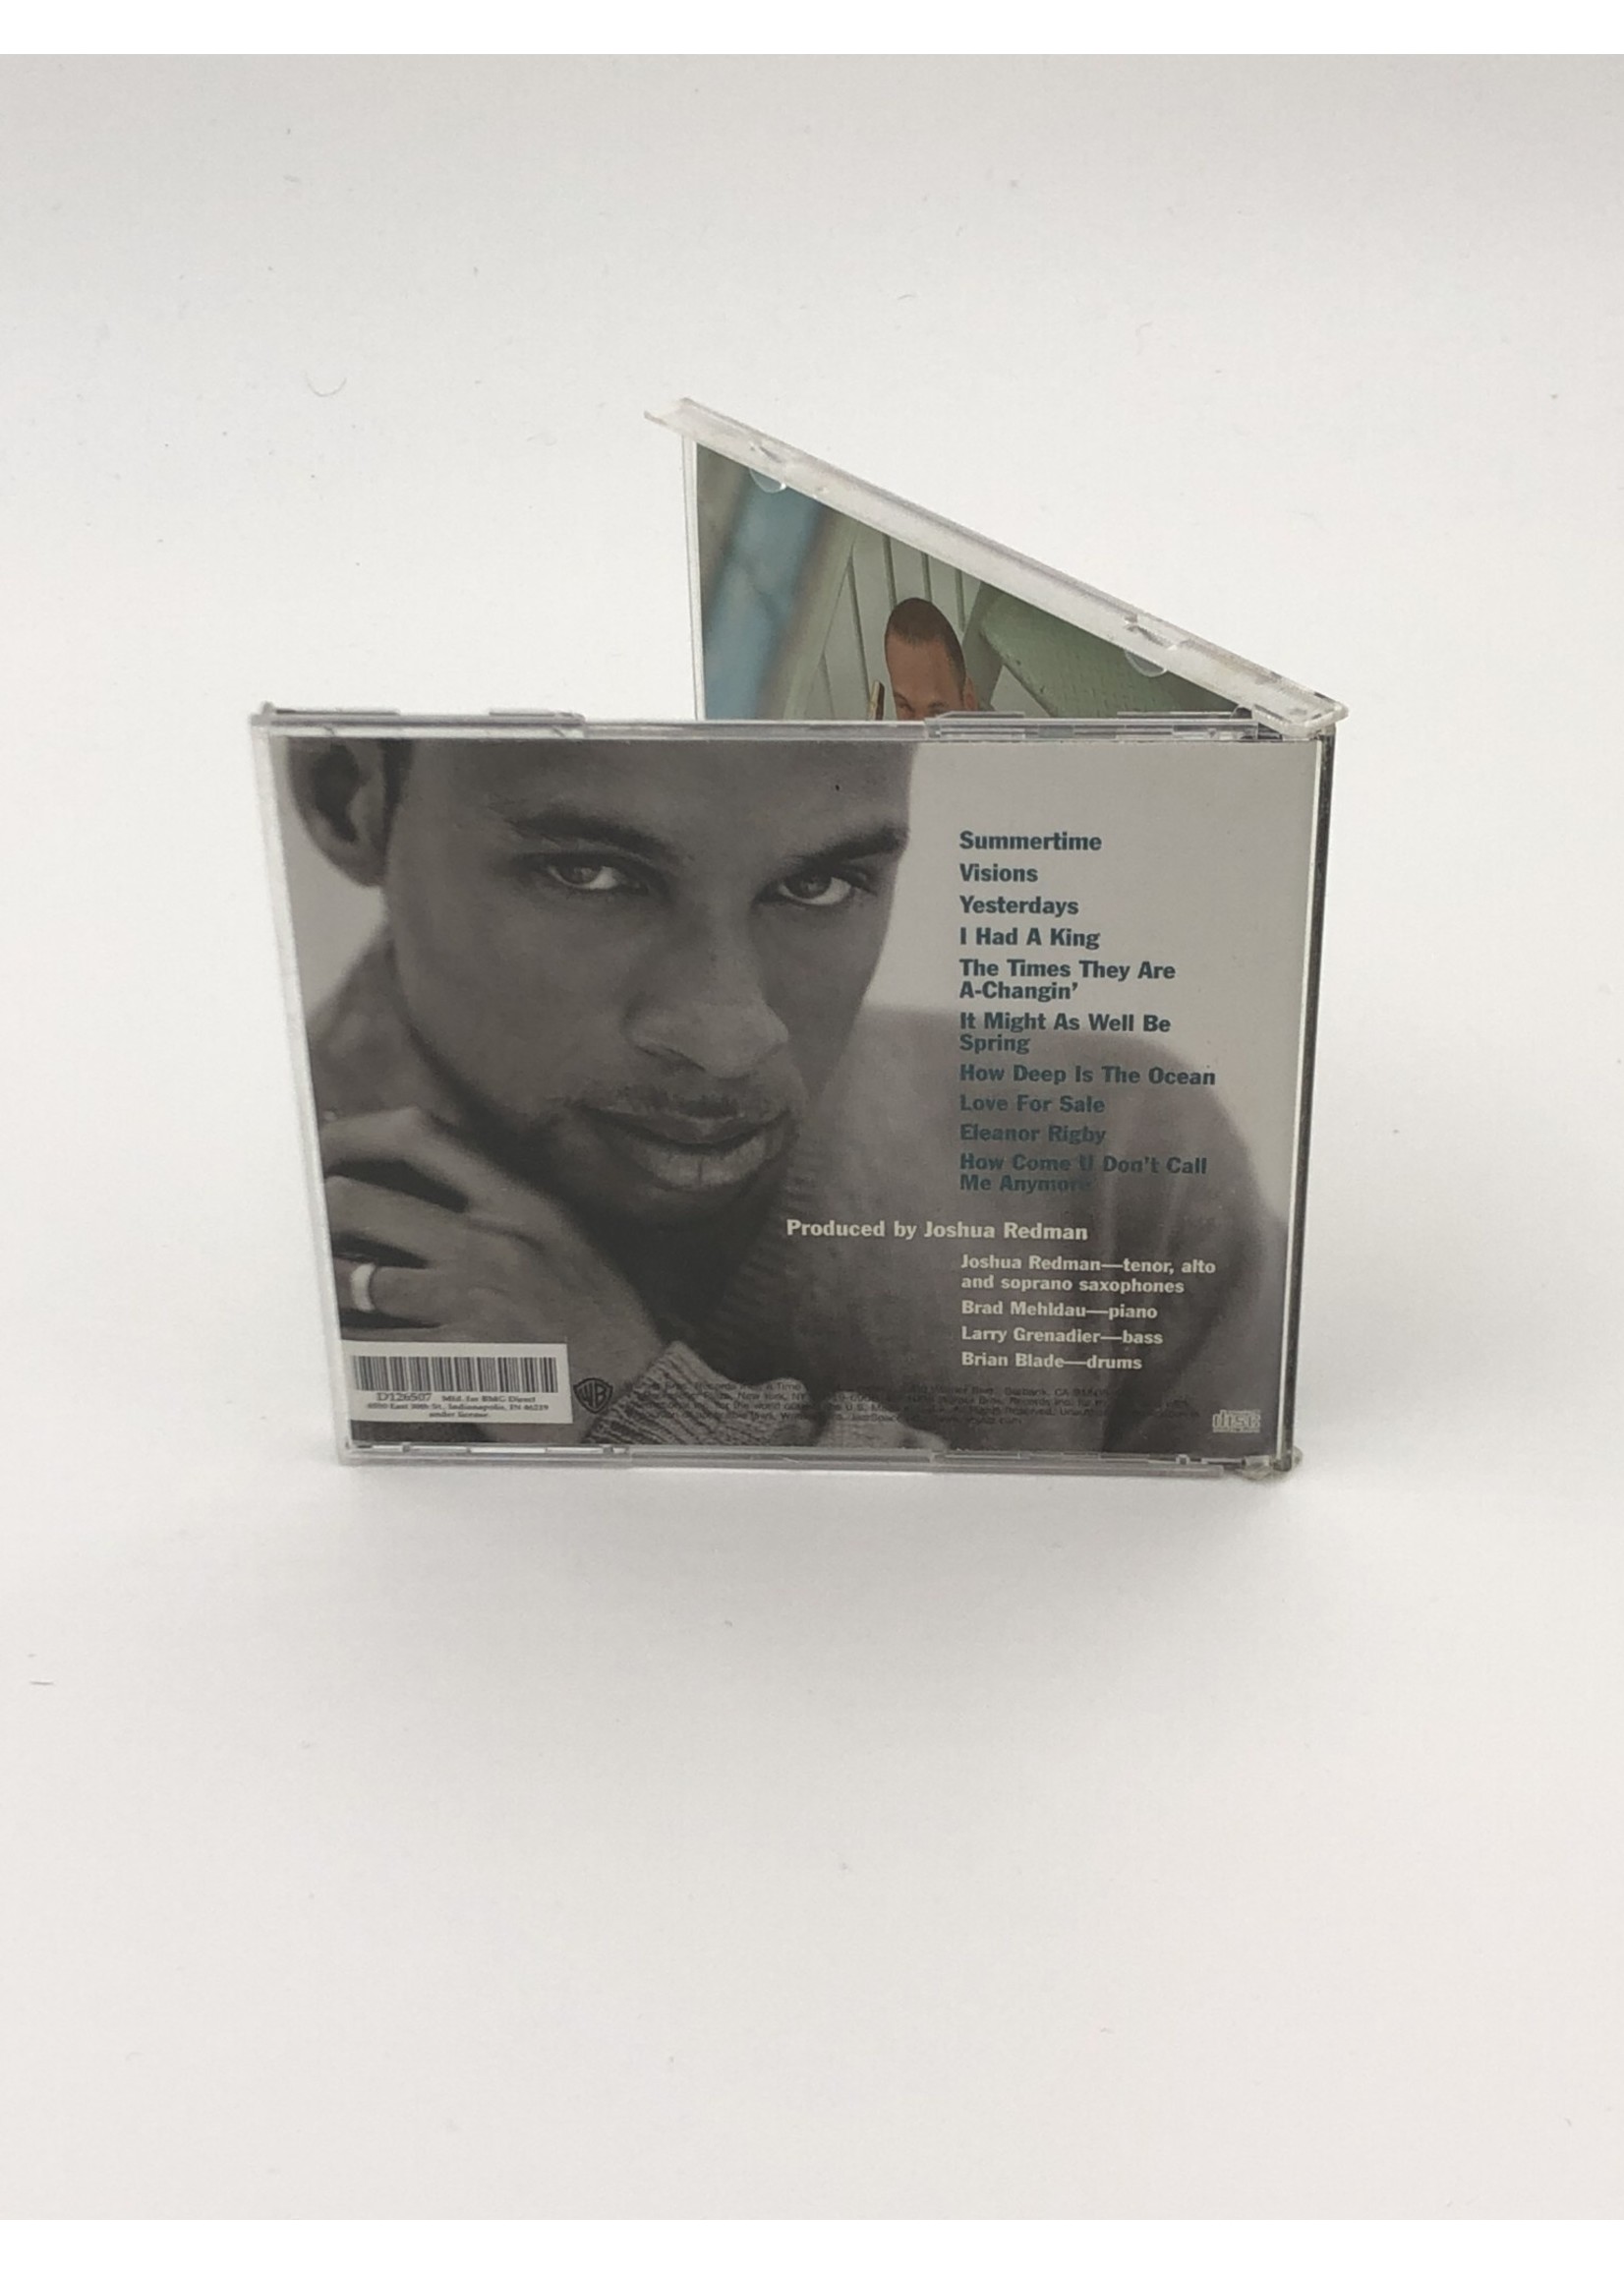 CD Joshua Redman: Timeless Tales CD